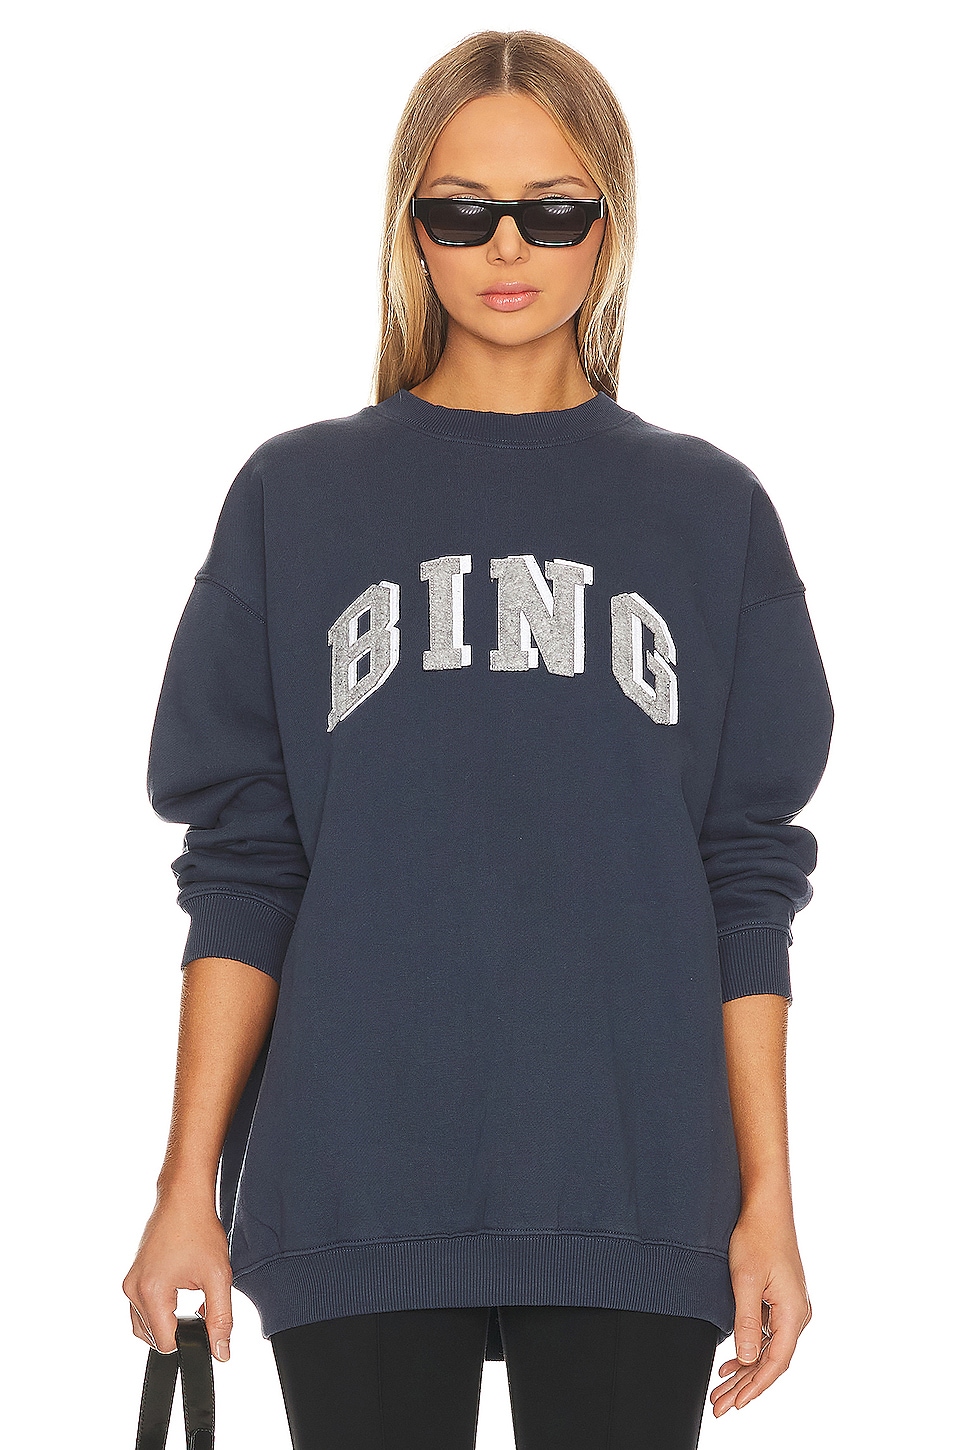 ANINE BING Tyler Bing Sweatshirt in Navy